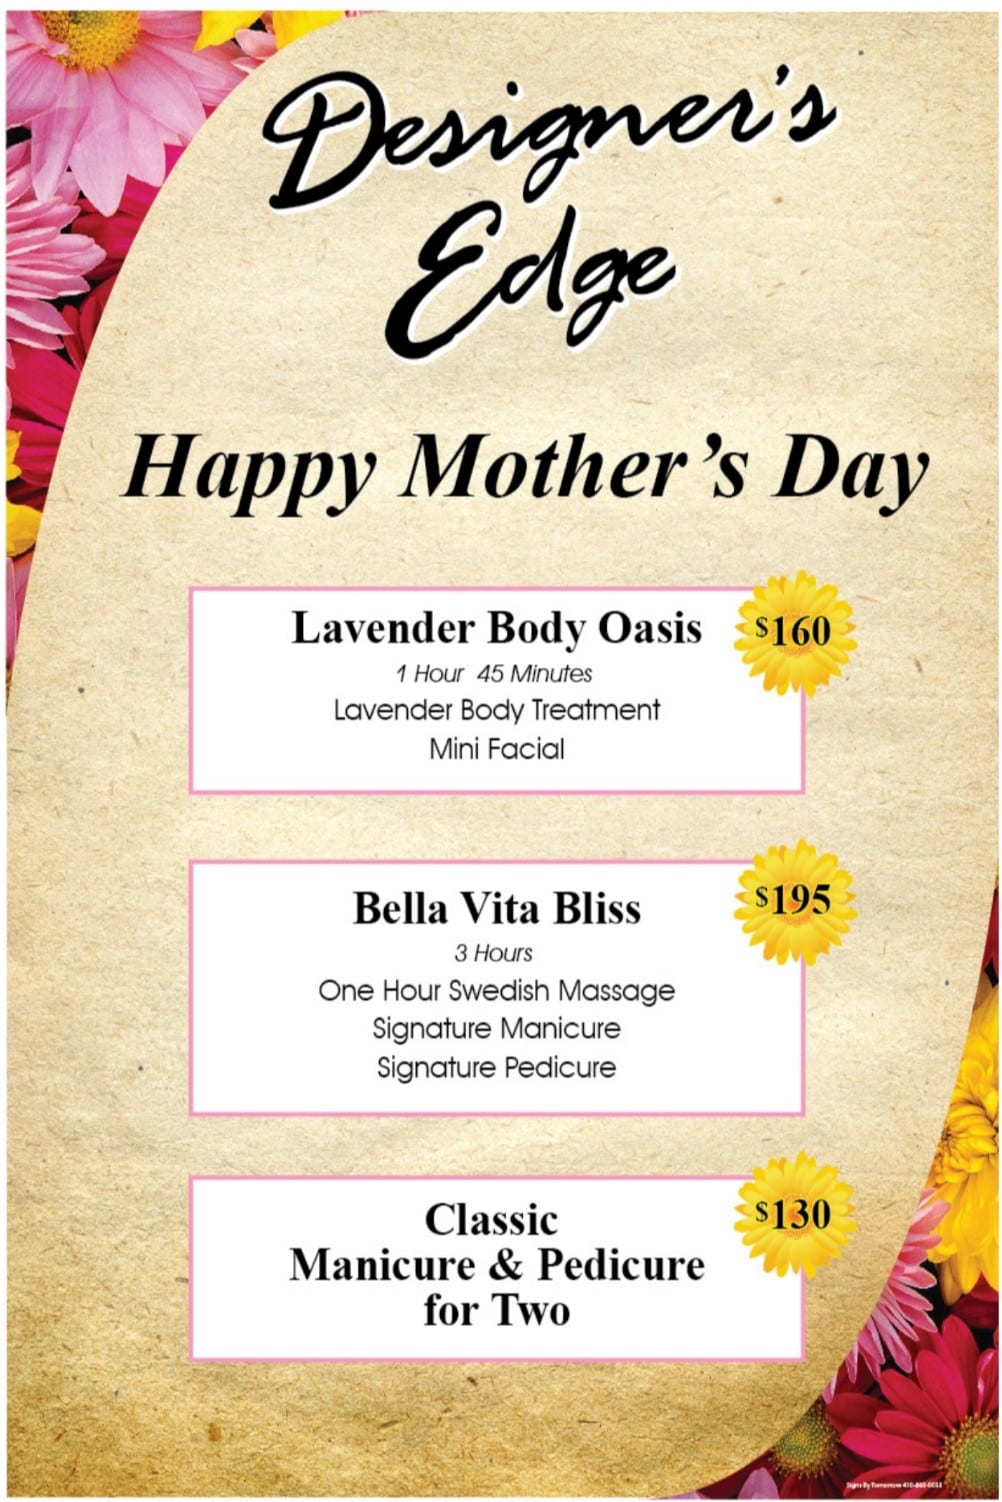 Mother's Day Special's! Designers Edge Hair Studio & Bella Vita